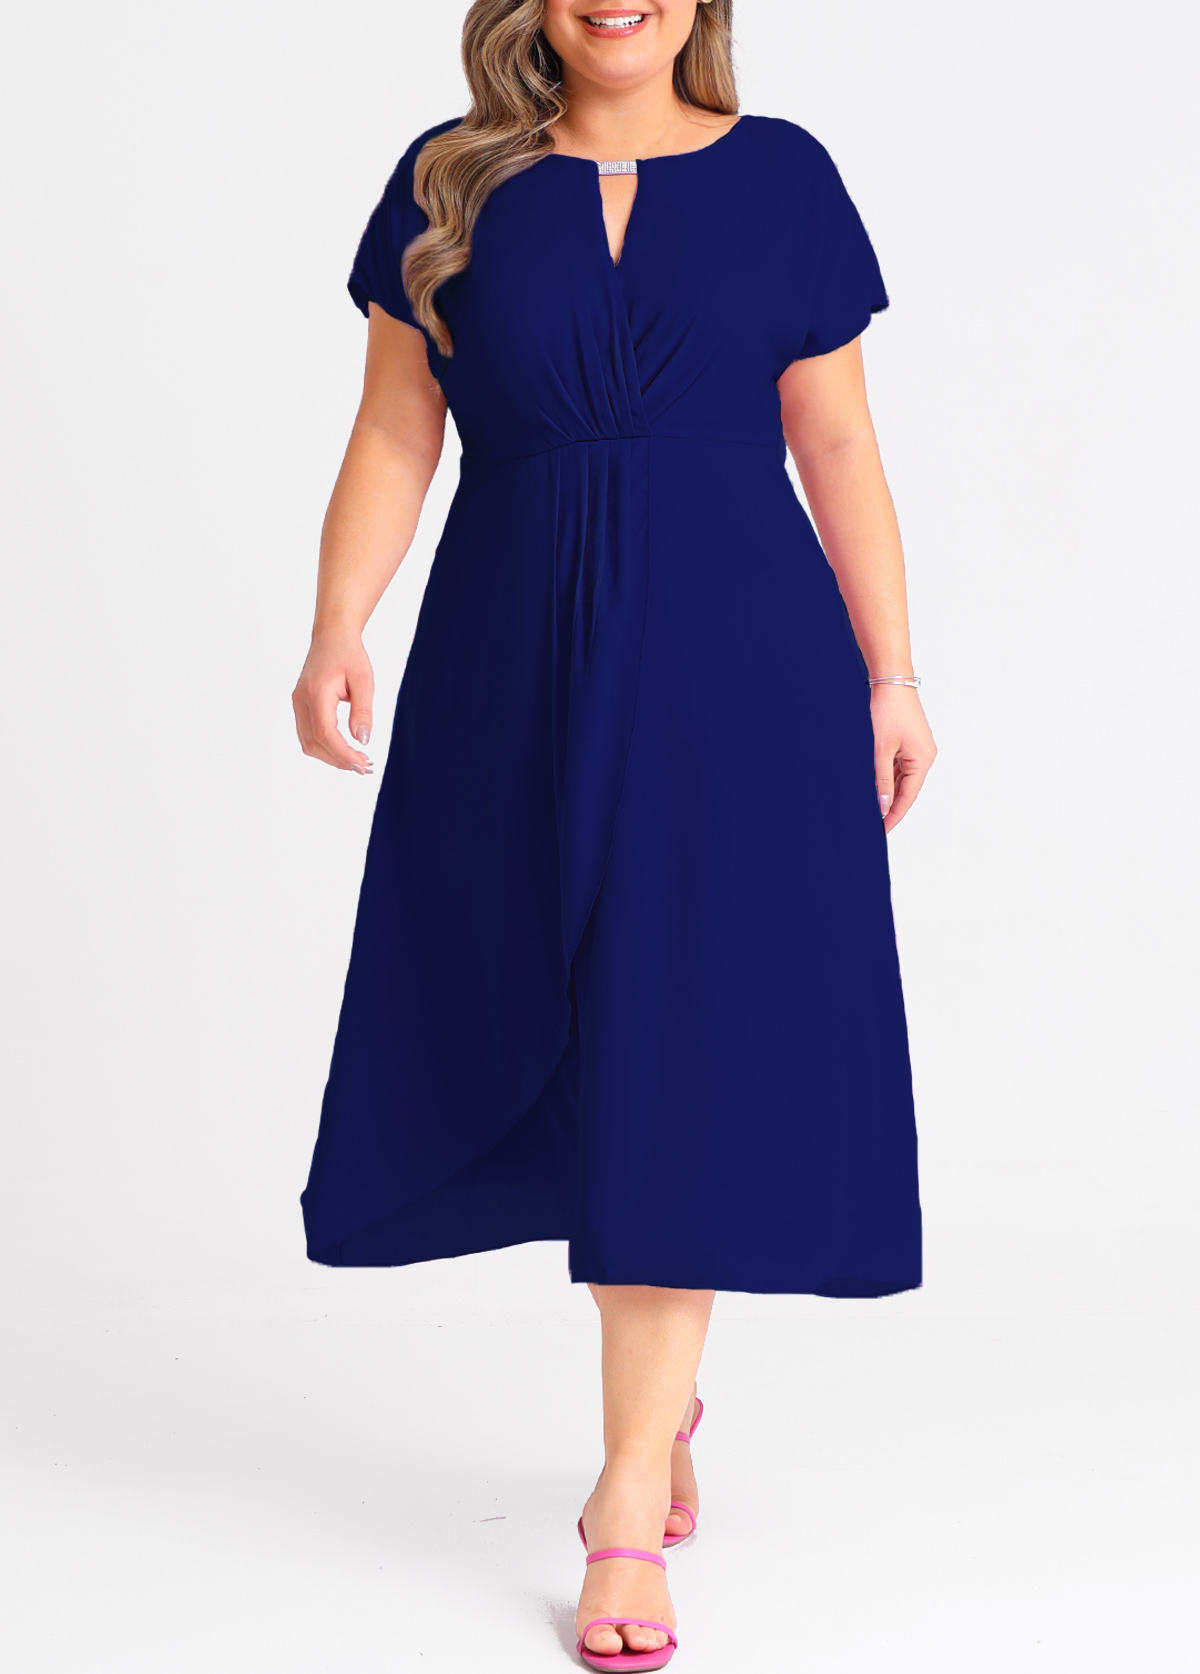 Plus Size Short Sleeve Navy Blue Dress